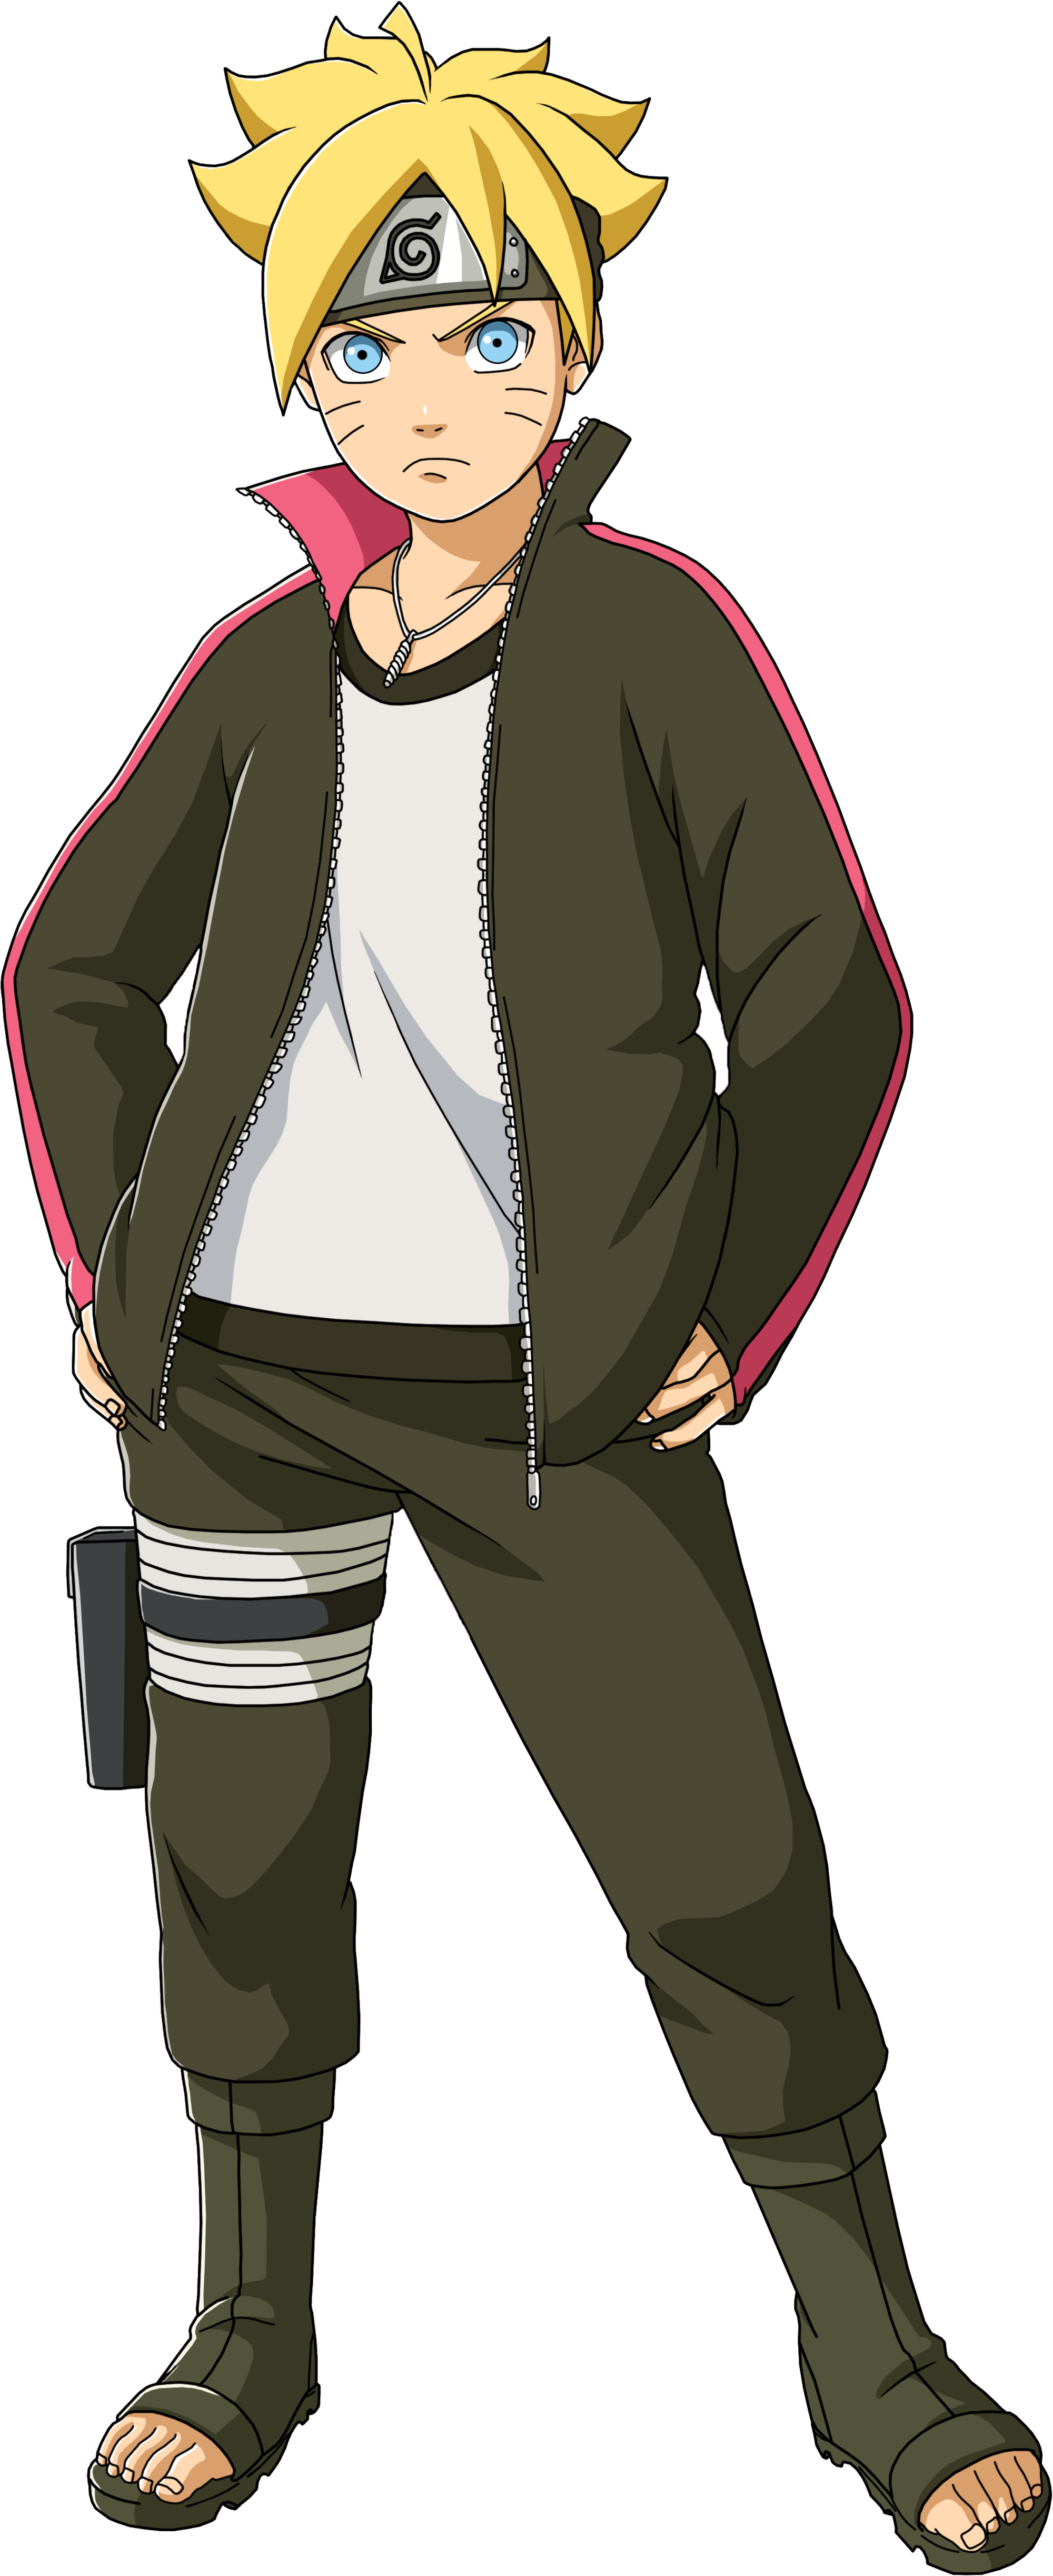 boruto characters genin Boruto genin - Anime Special